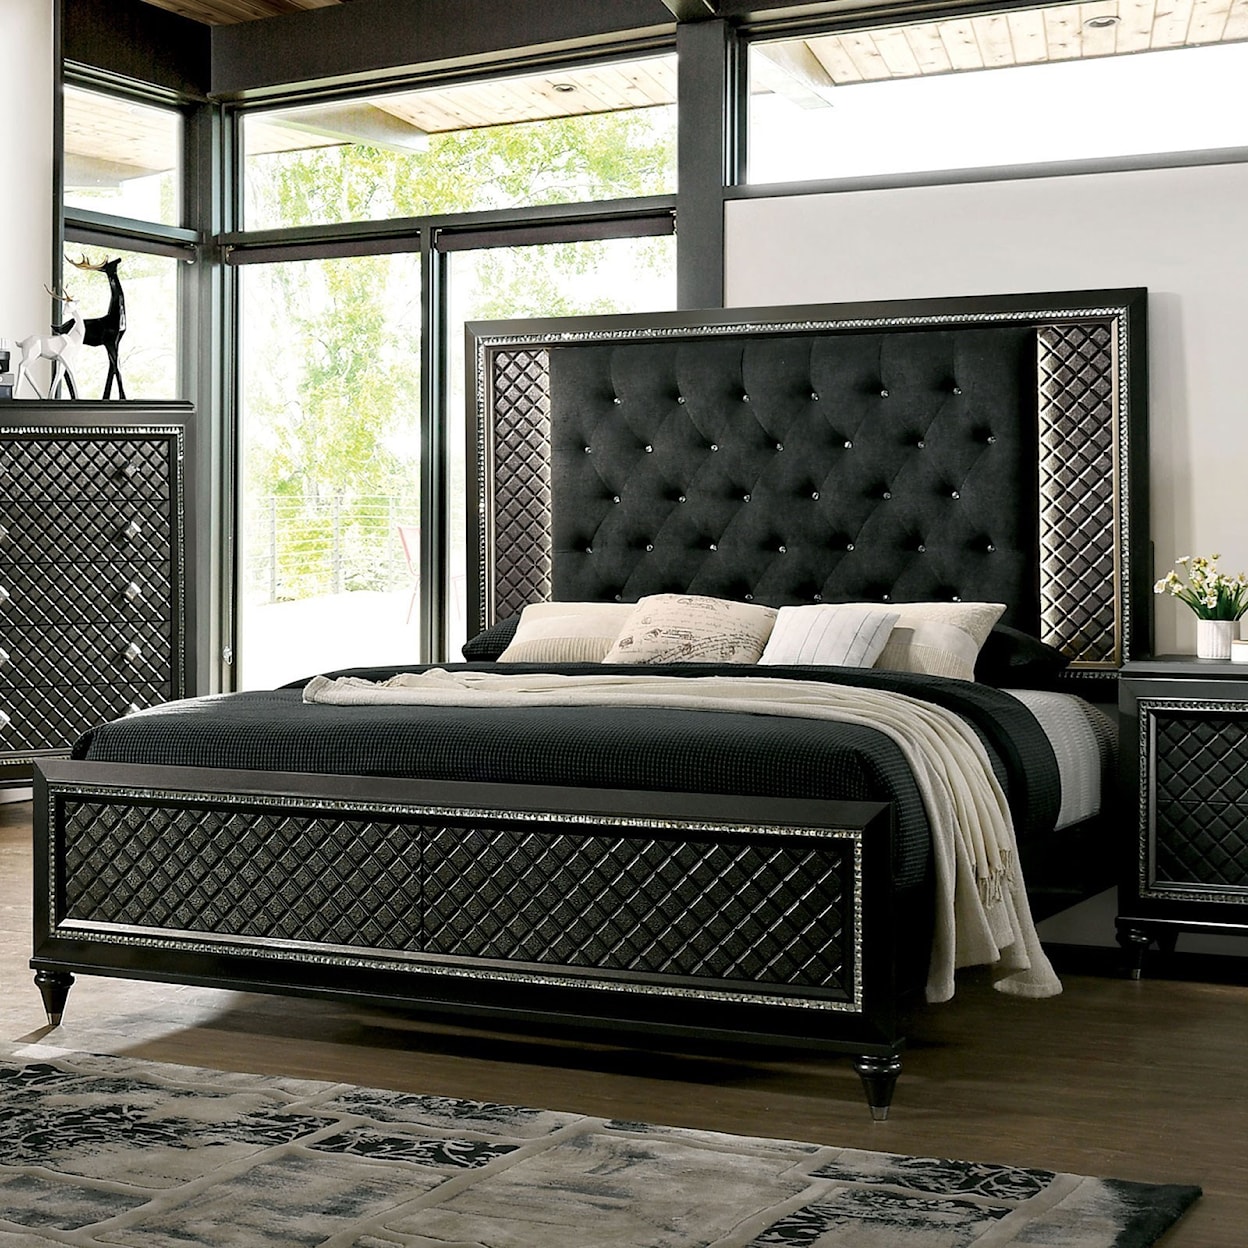 FUSA Demetria Cal King Upholstered Bed